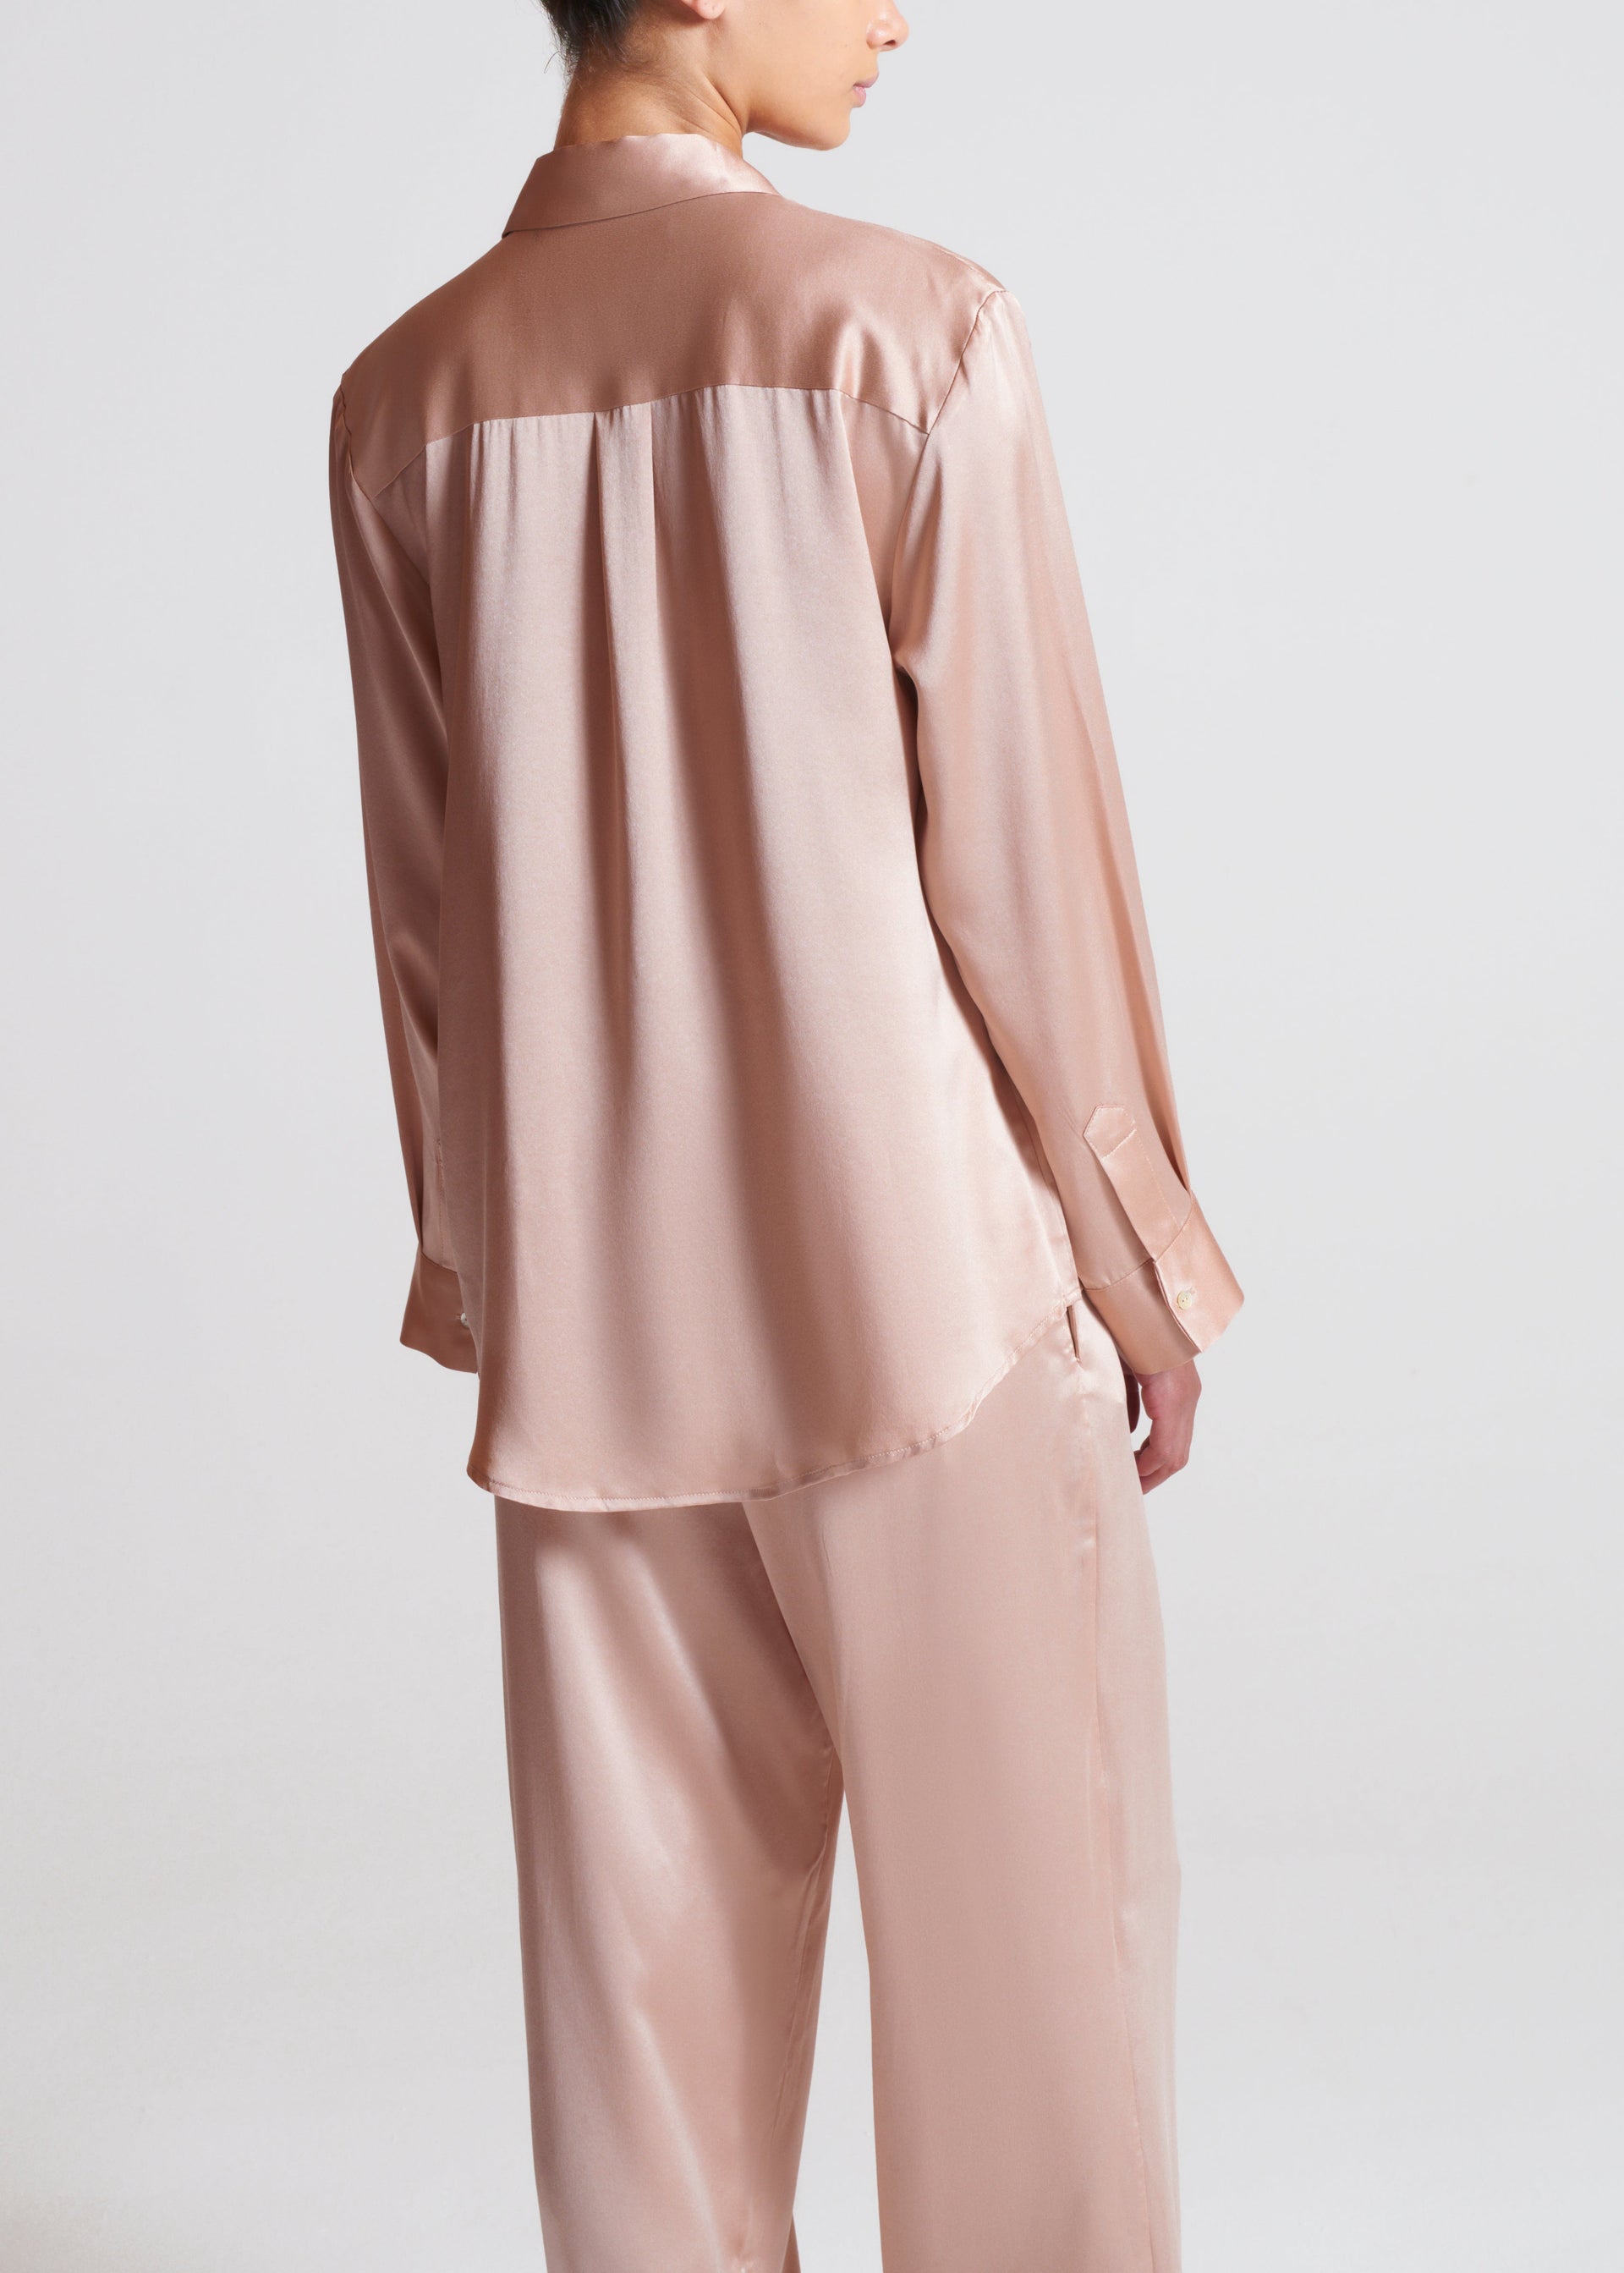 London Pyjama Top Pale Blush Silk